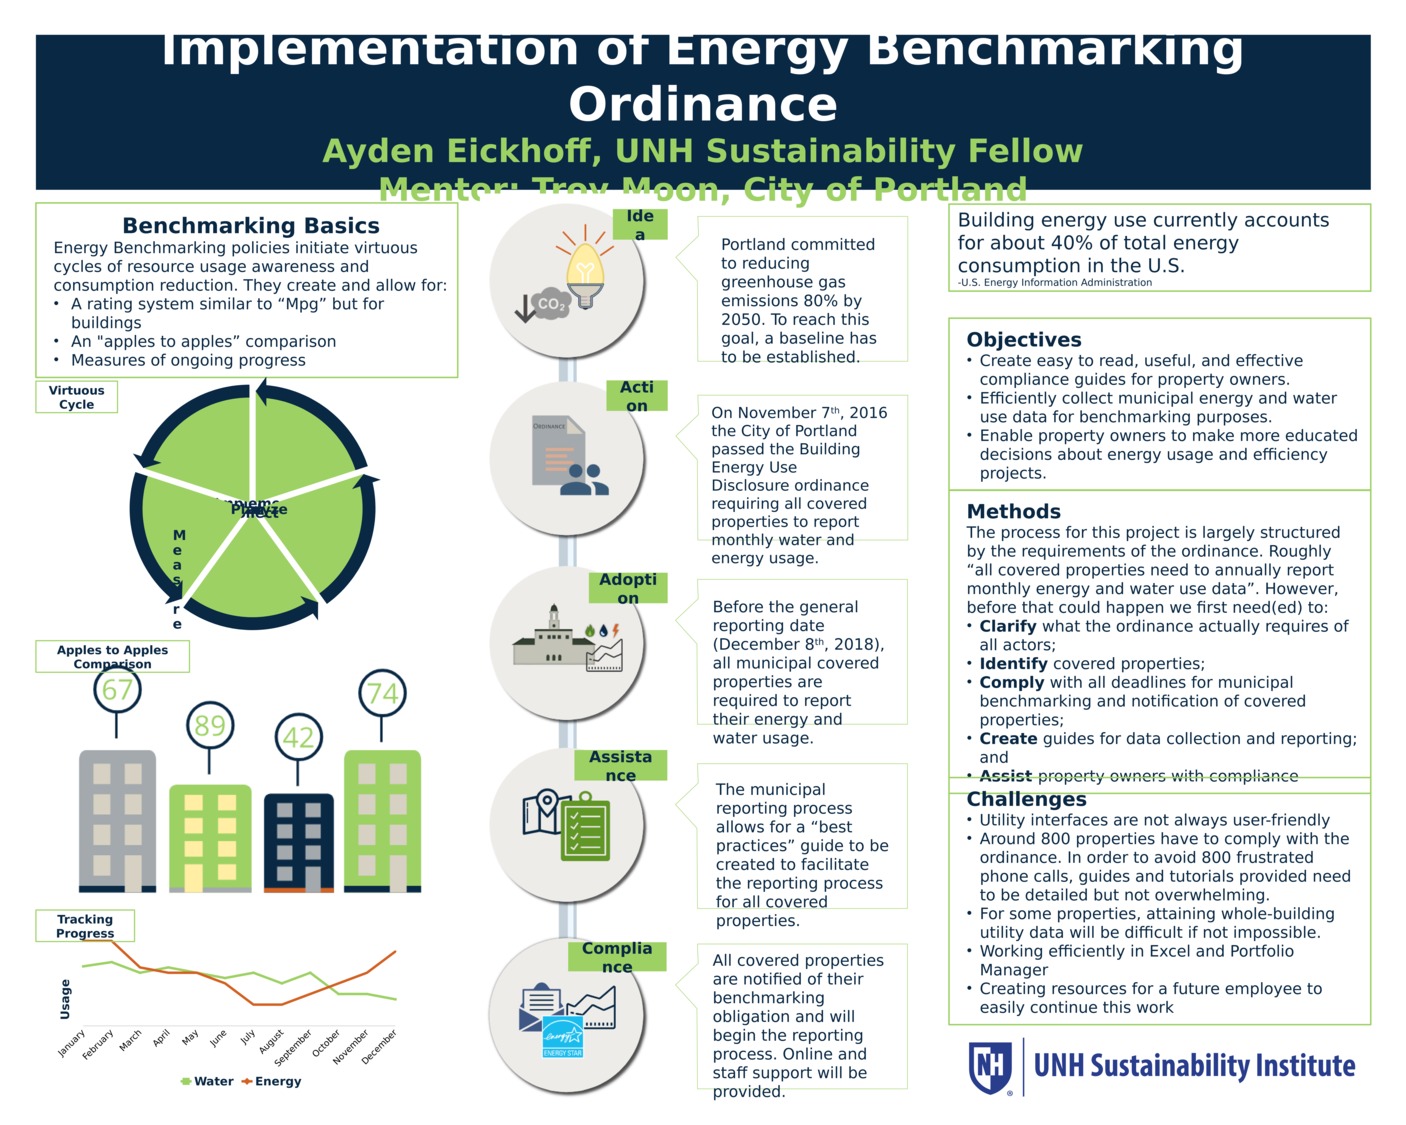 Energy Benchmarking Ordinance Ayden Eickhoff by aydeneickhoff